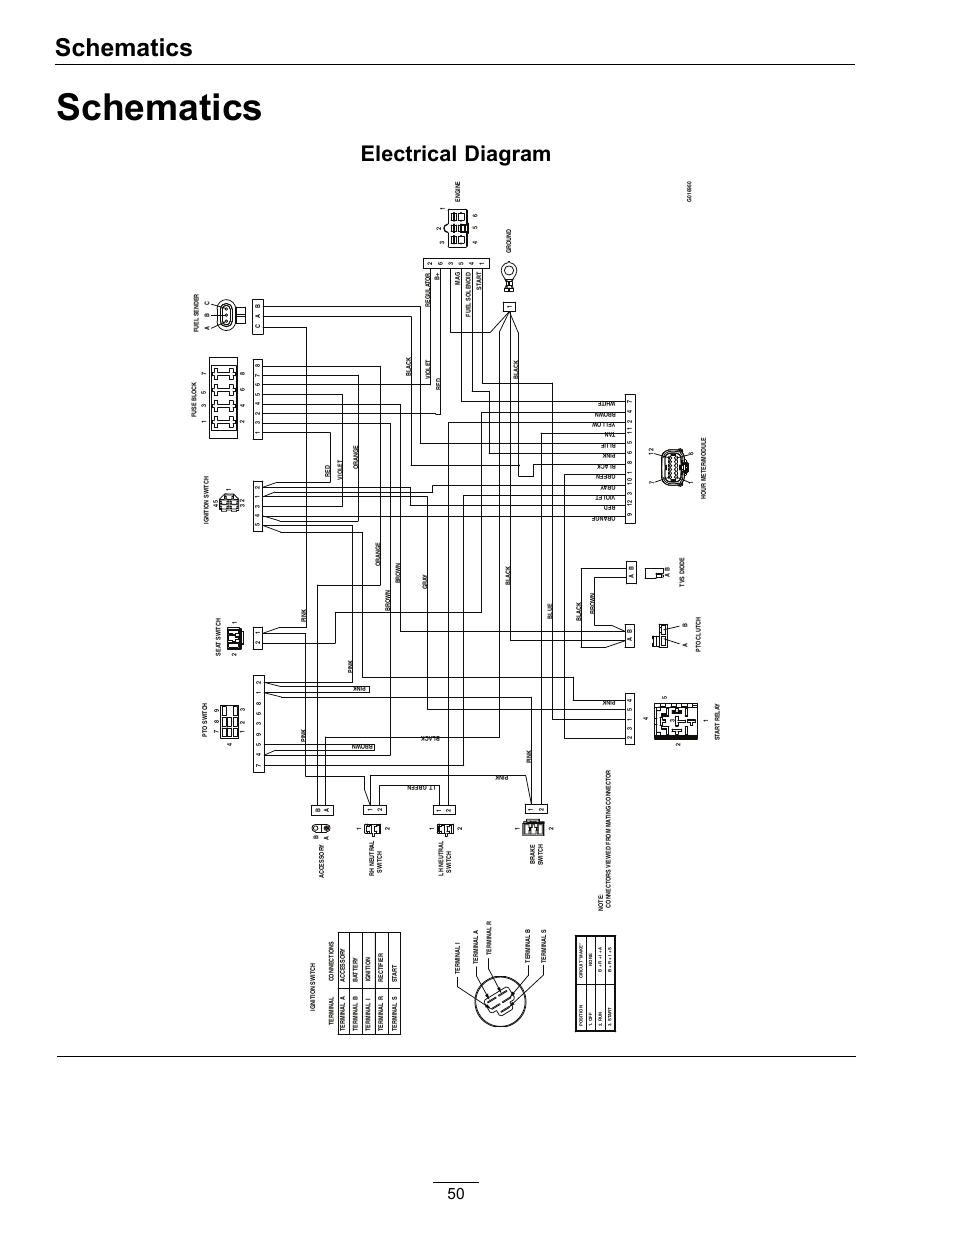 1969 cessna 172 magneto wiring diagram